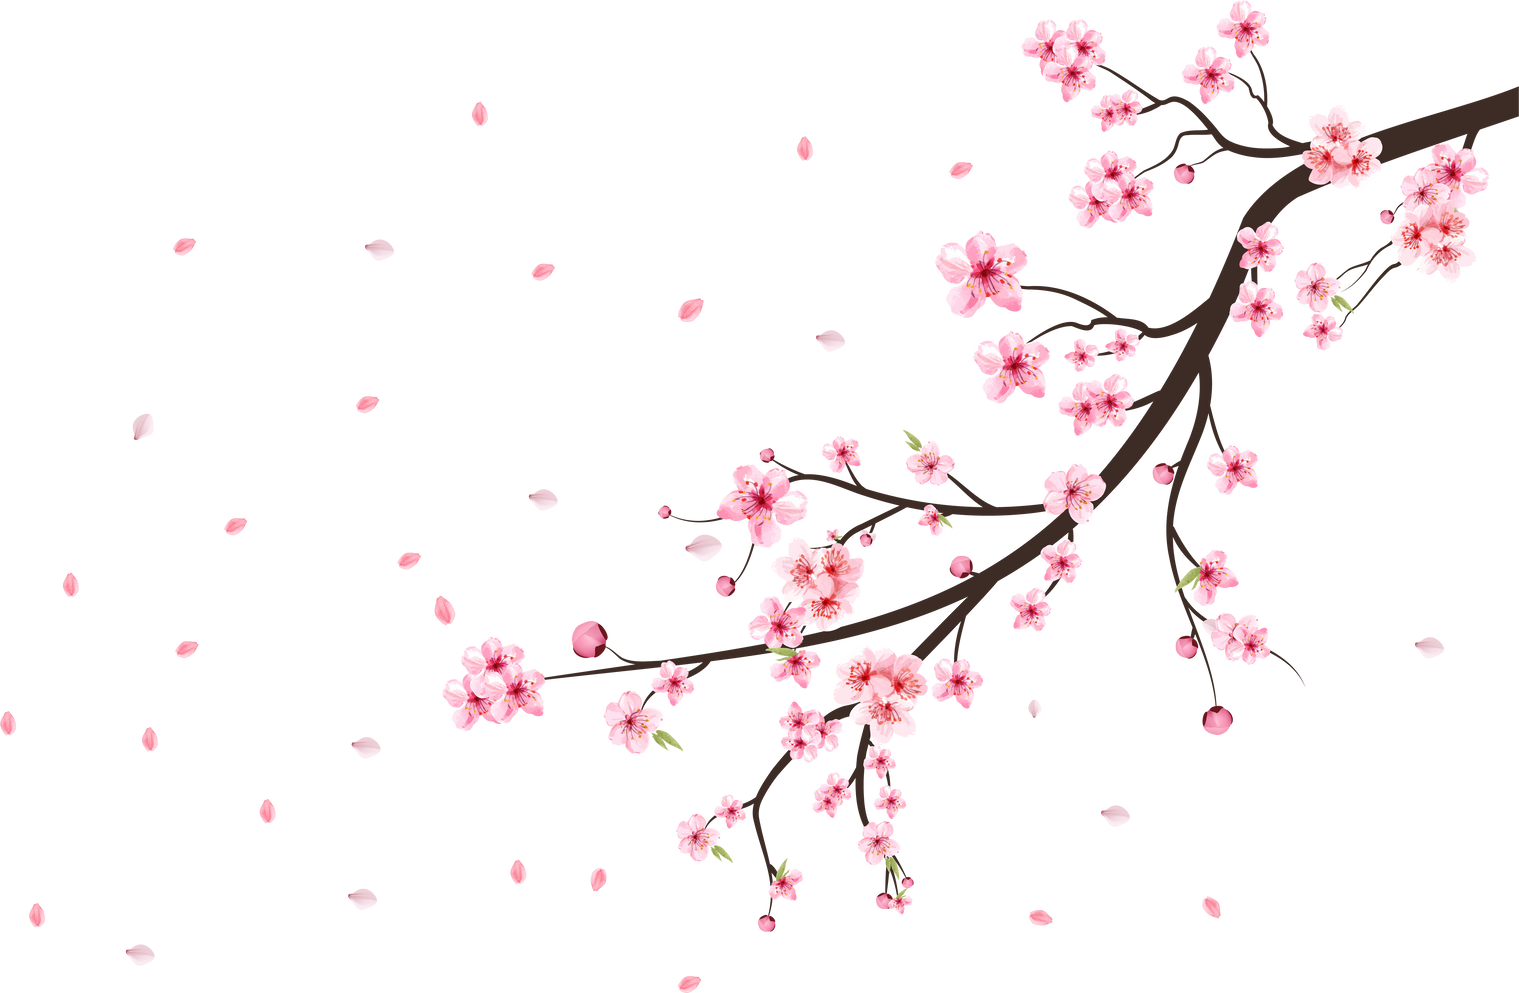 Cherry blossom flower blooming vector. Pink sakura flower background. Watercolor cherry blossom vector. Cherry blossom branch with sakura flower. Sakura on white background. Watercolor cherry bud.